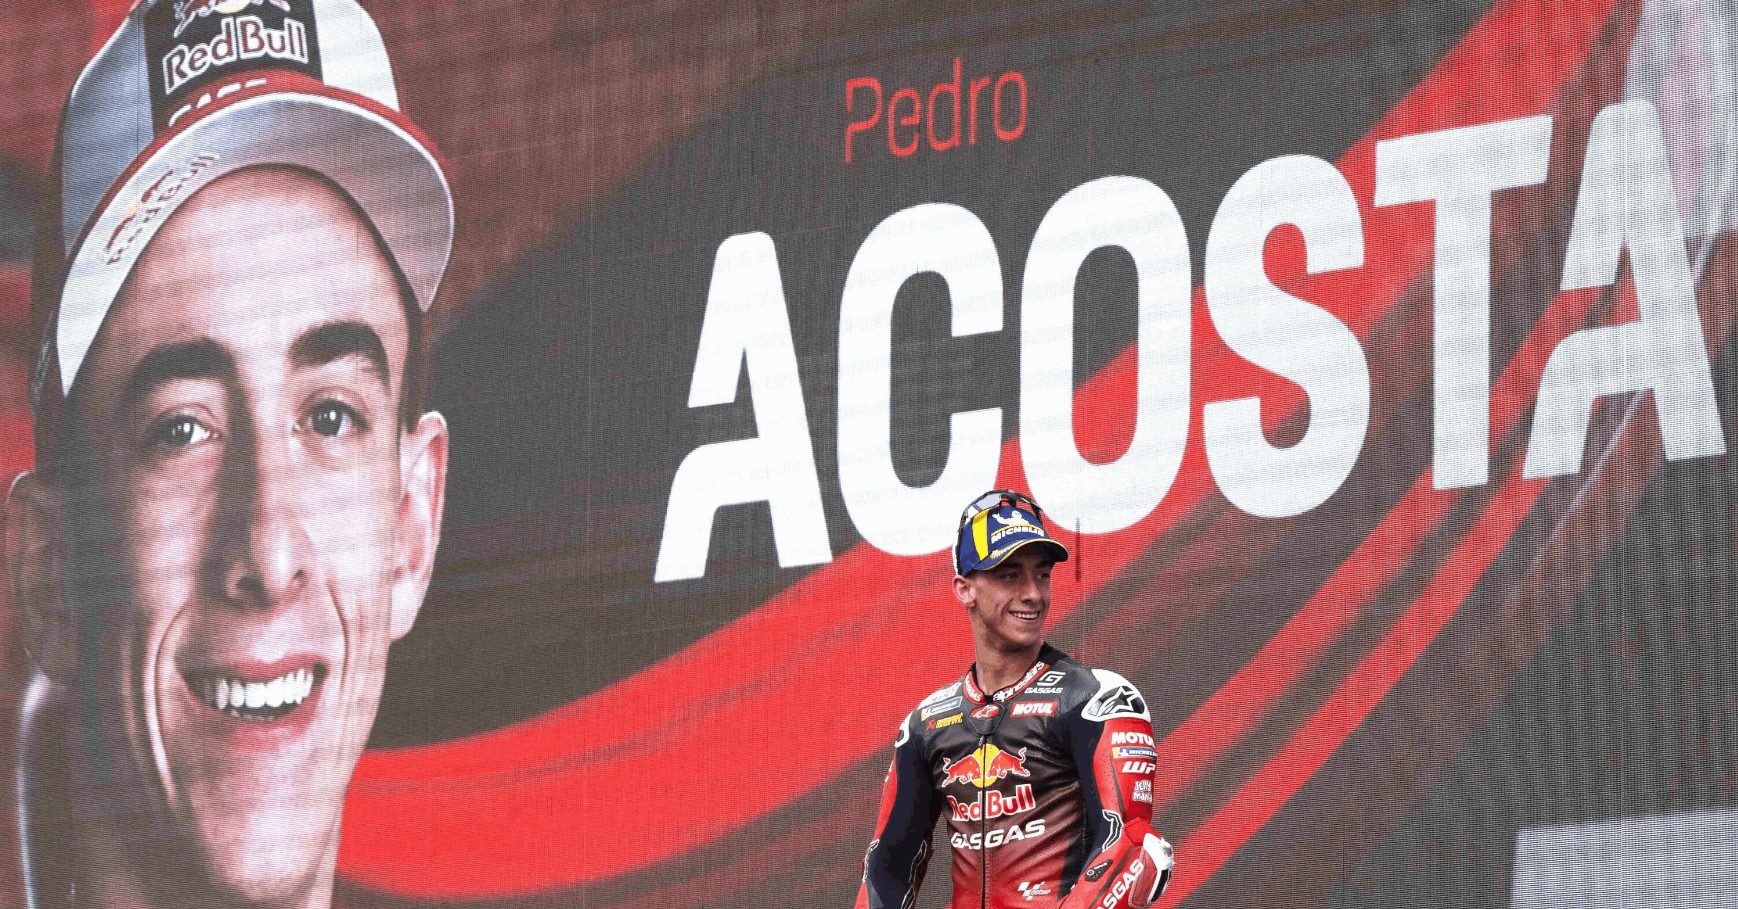 Pedro Acosta MotoGP: Ξεκινά έναν άλλο τομέα της διαδικασίας εκμάθησής του στο MotoGP